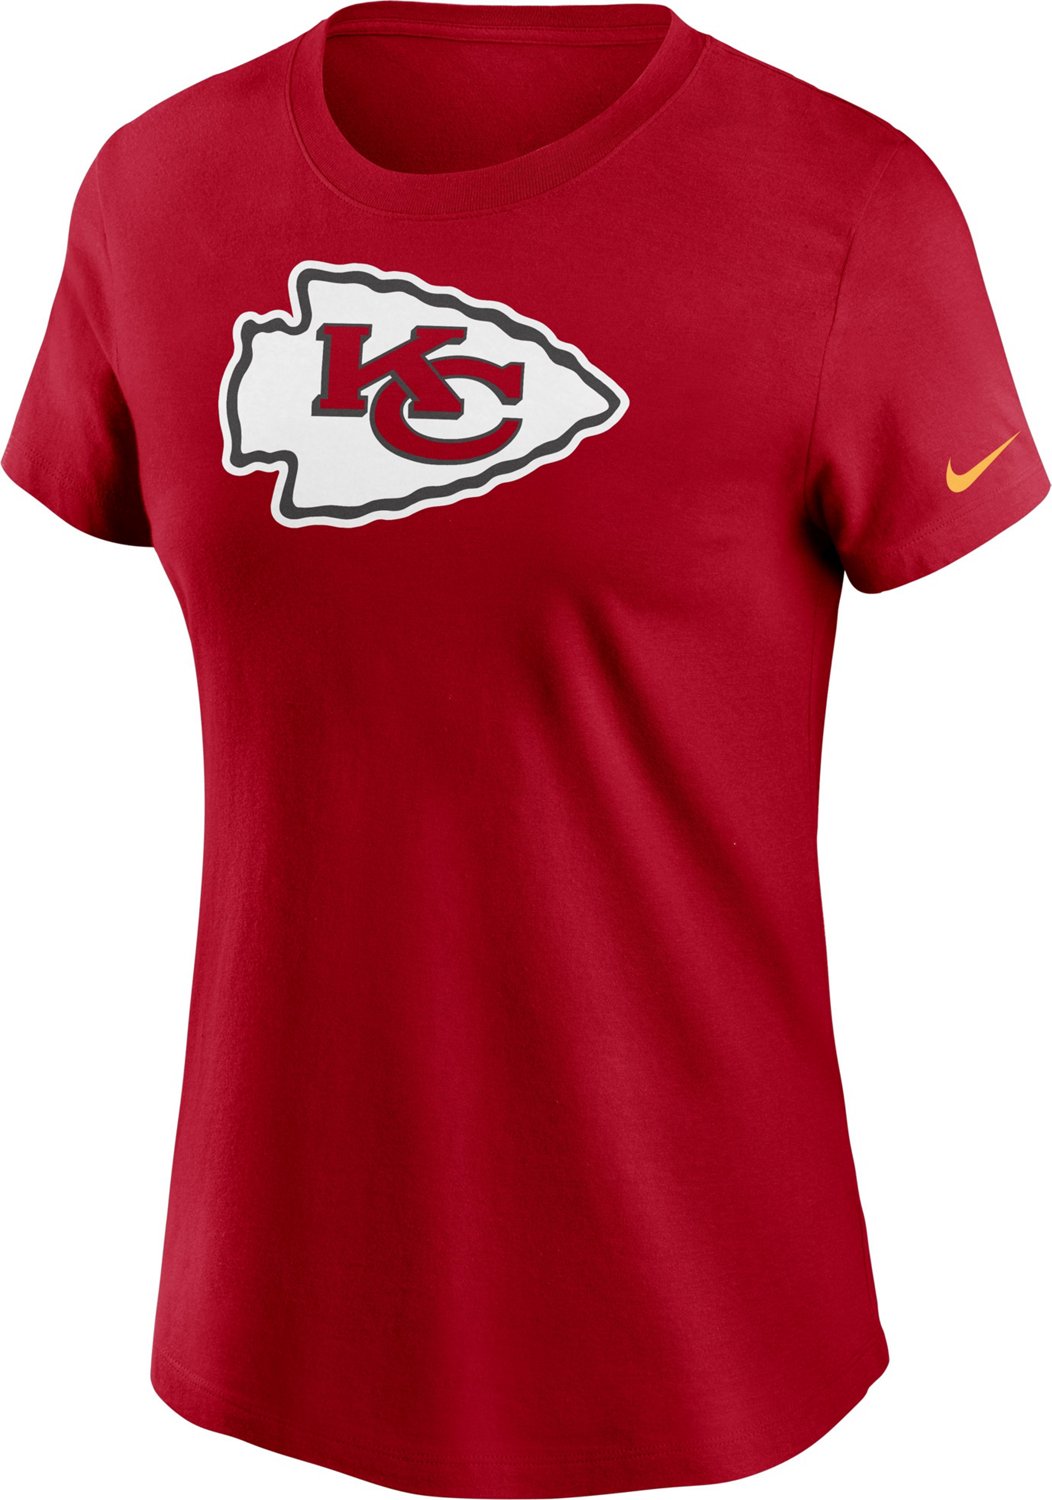 Nike Women's Kansas City Chiefs Primary Logo T-shirt